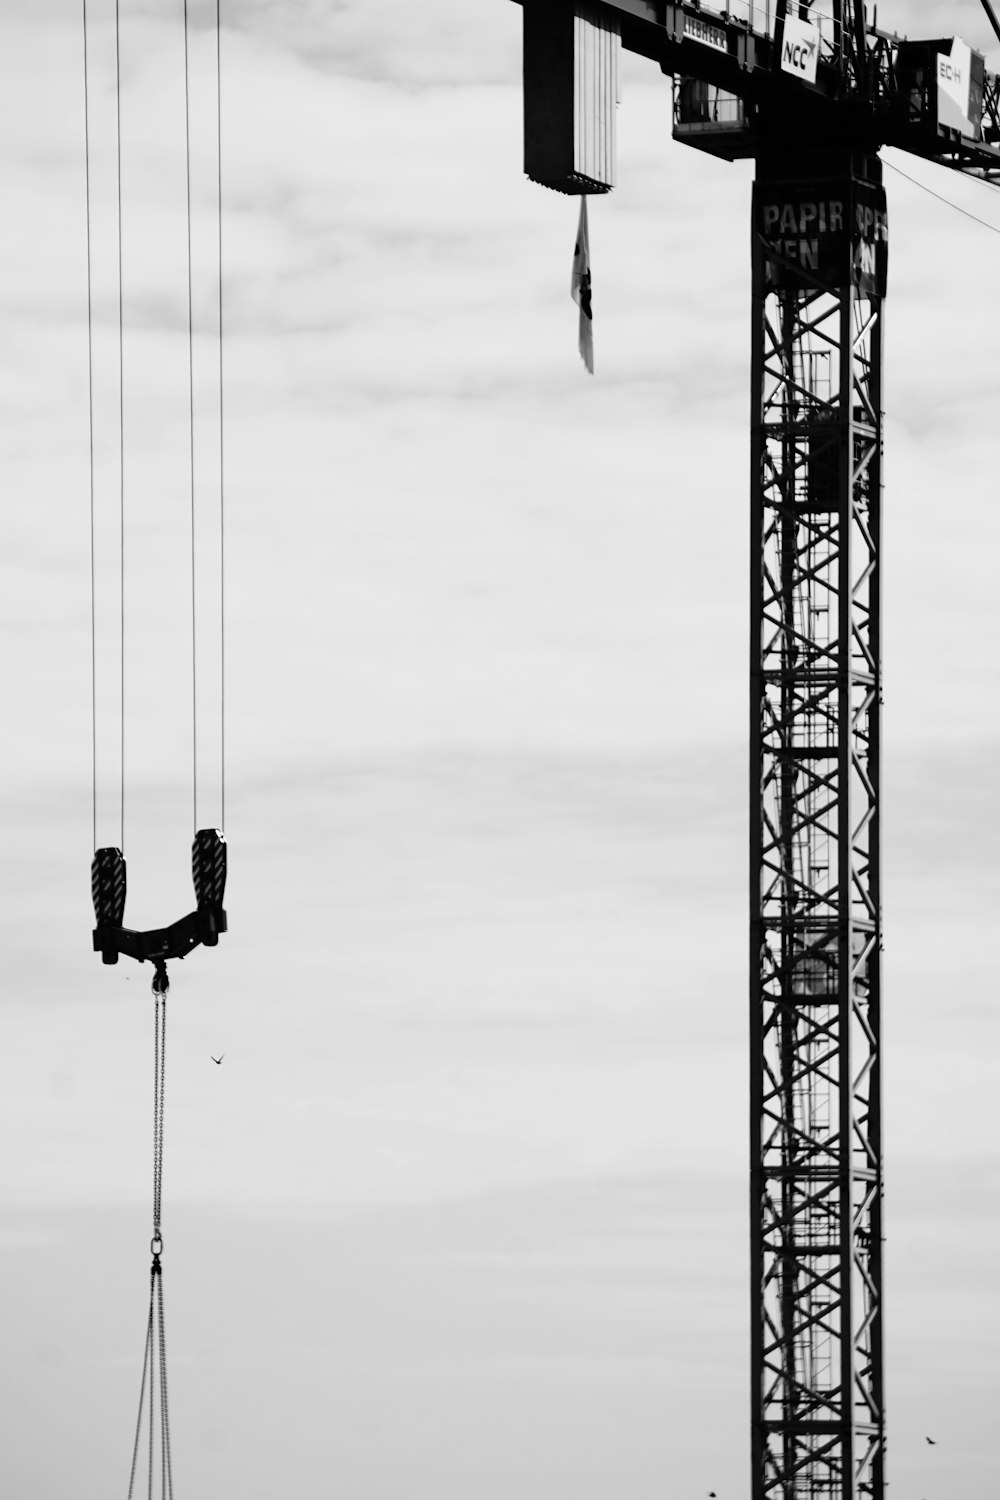 a black and white photo of a crane